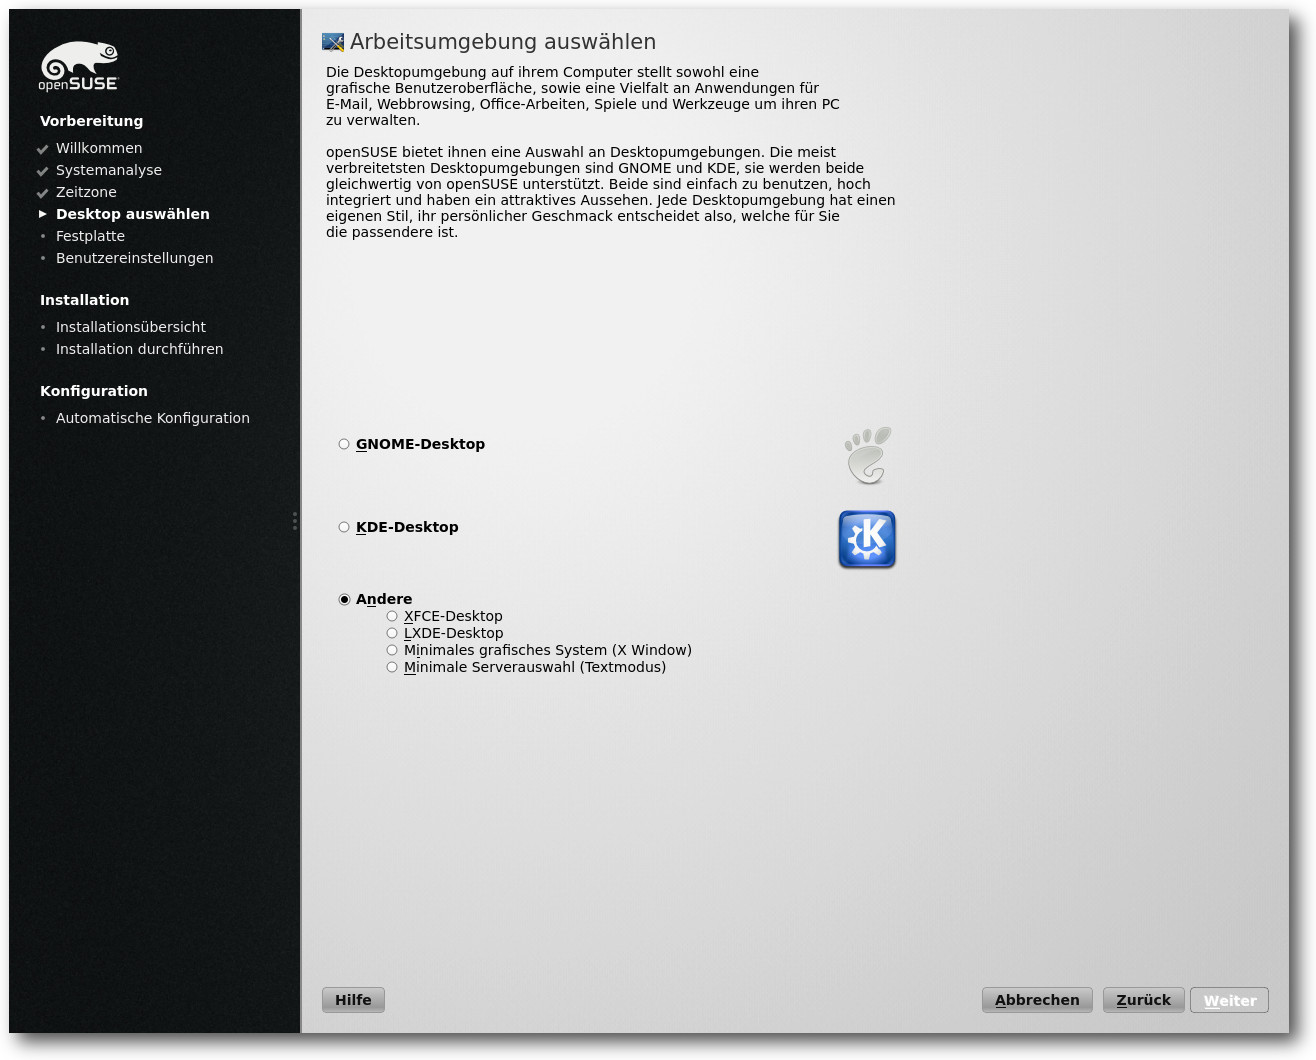 openSUSE_arbeitsumgebung-installation.jpg